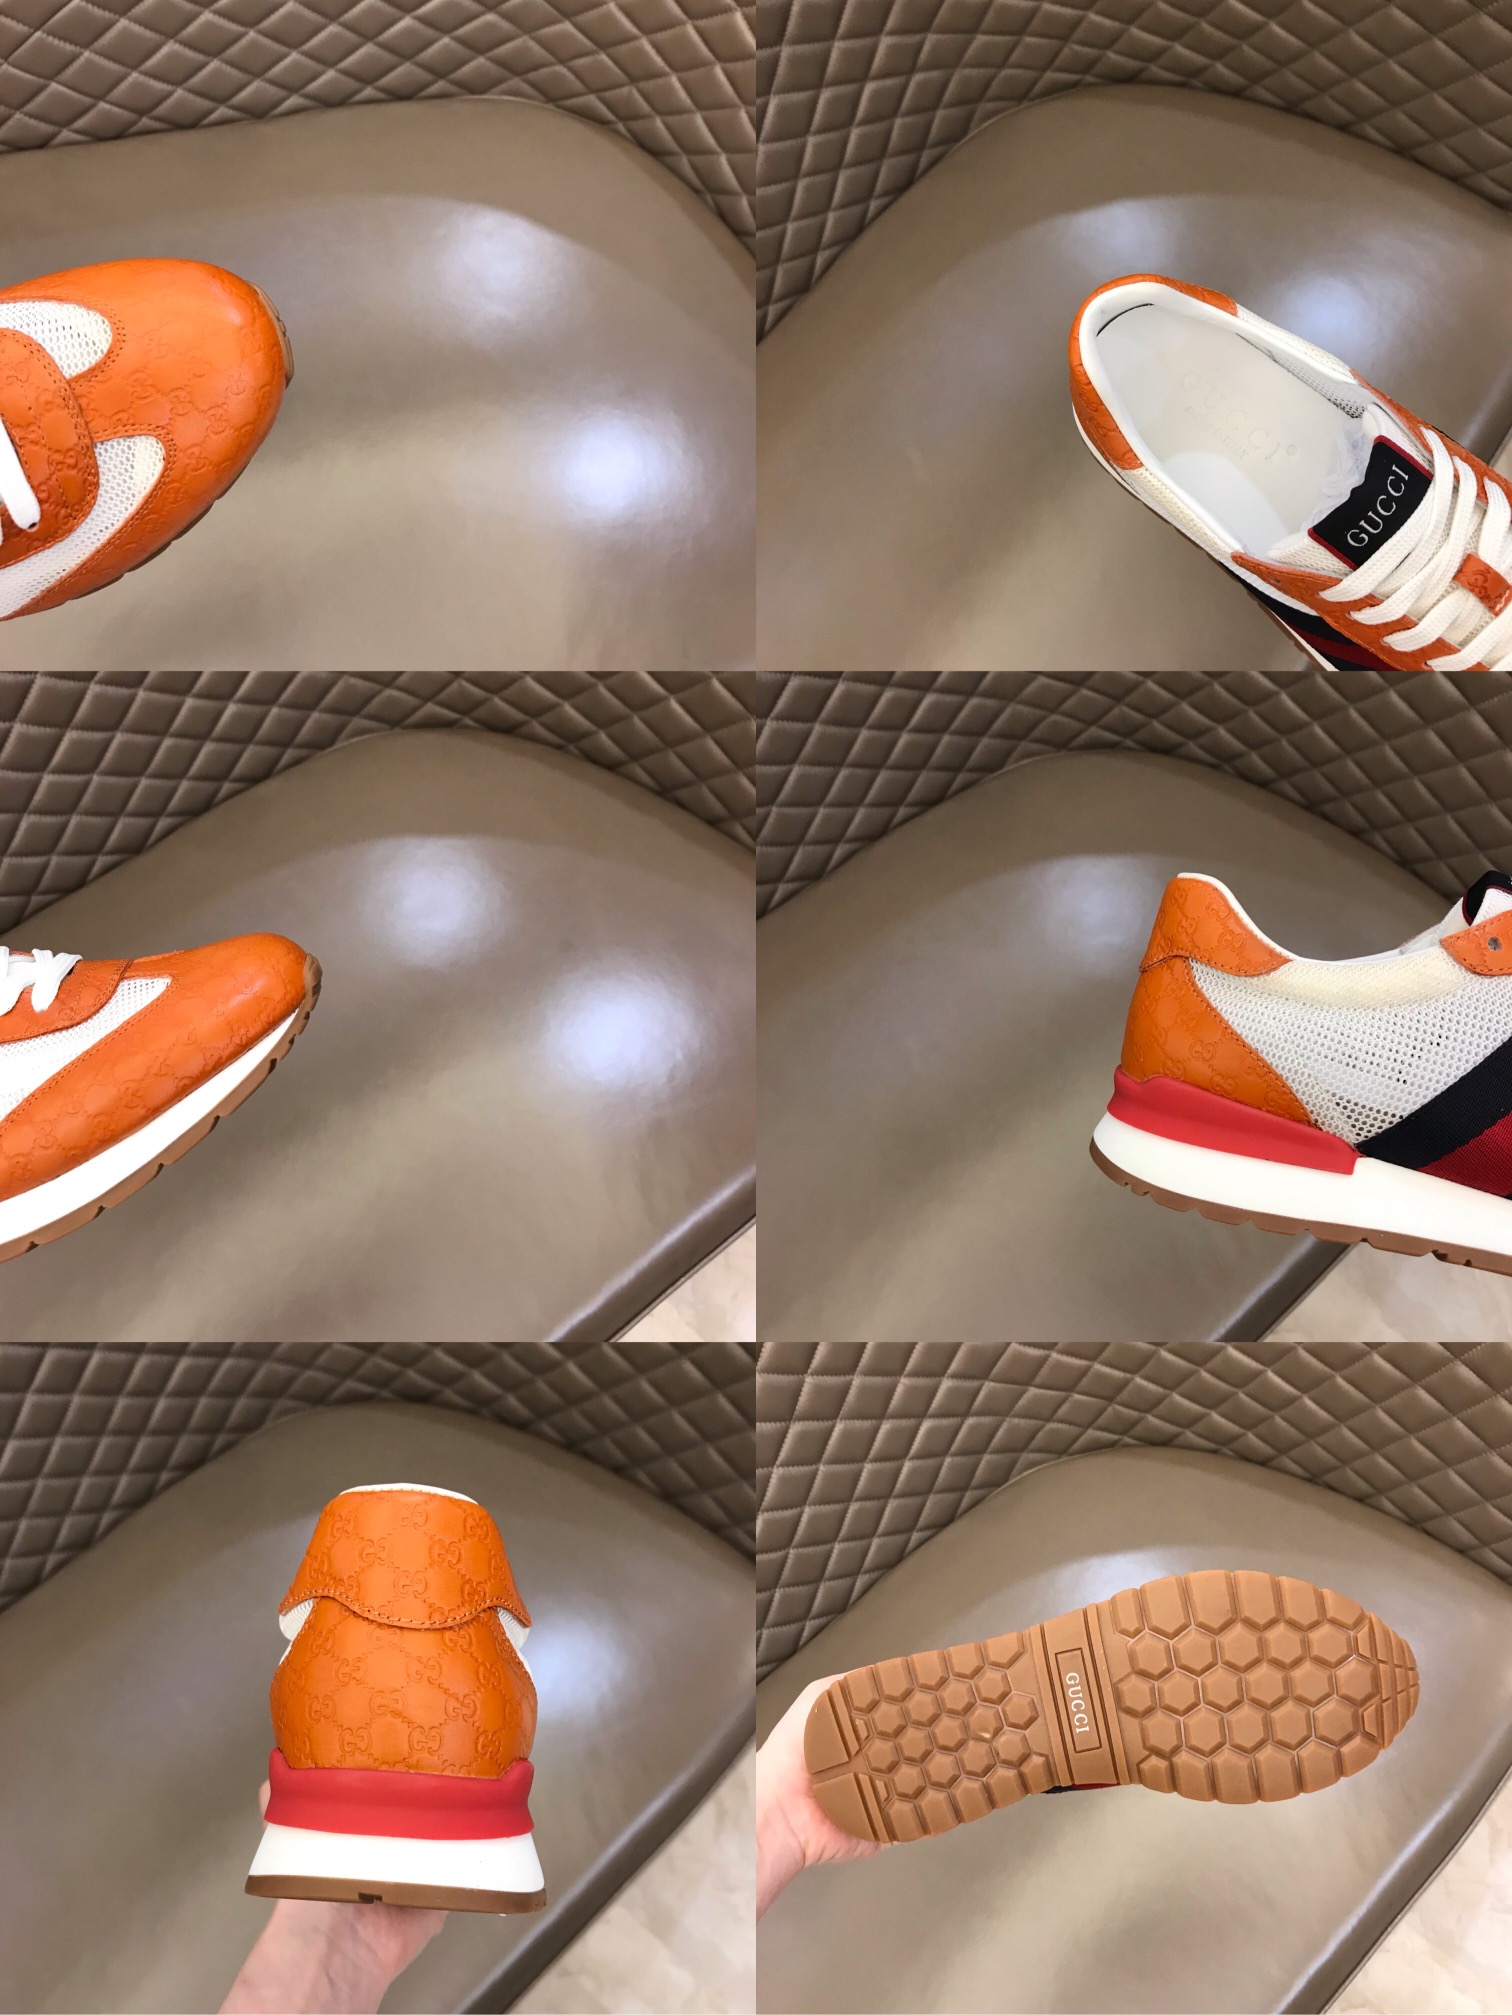 Gucci Sneaker Screener in Orange